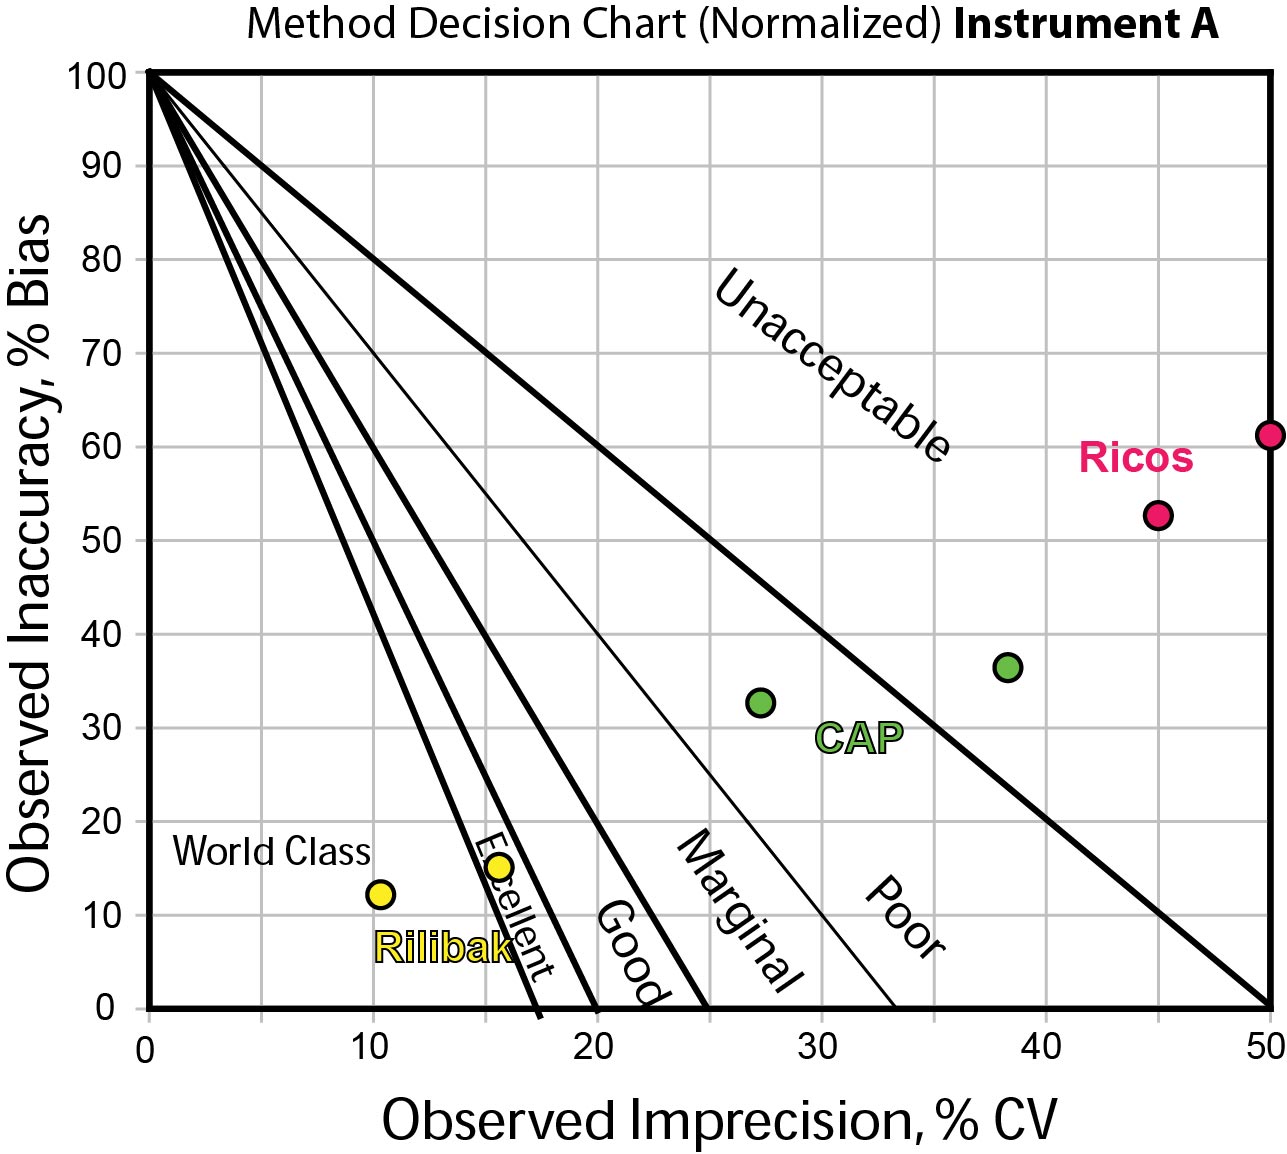 2012-HbA1c-Normalied Method Decision Chart, POC method A